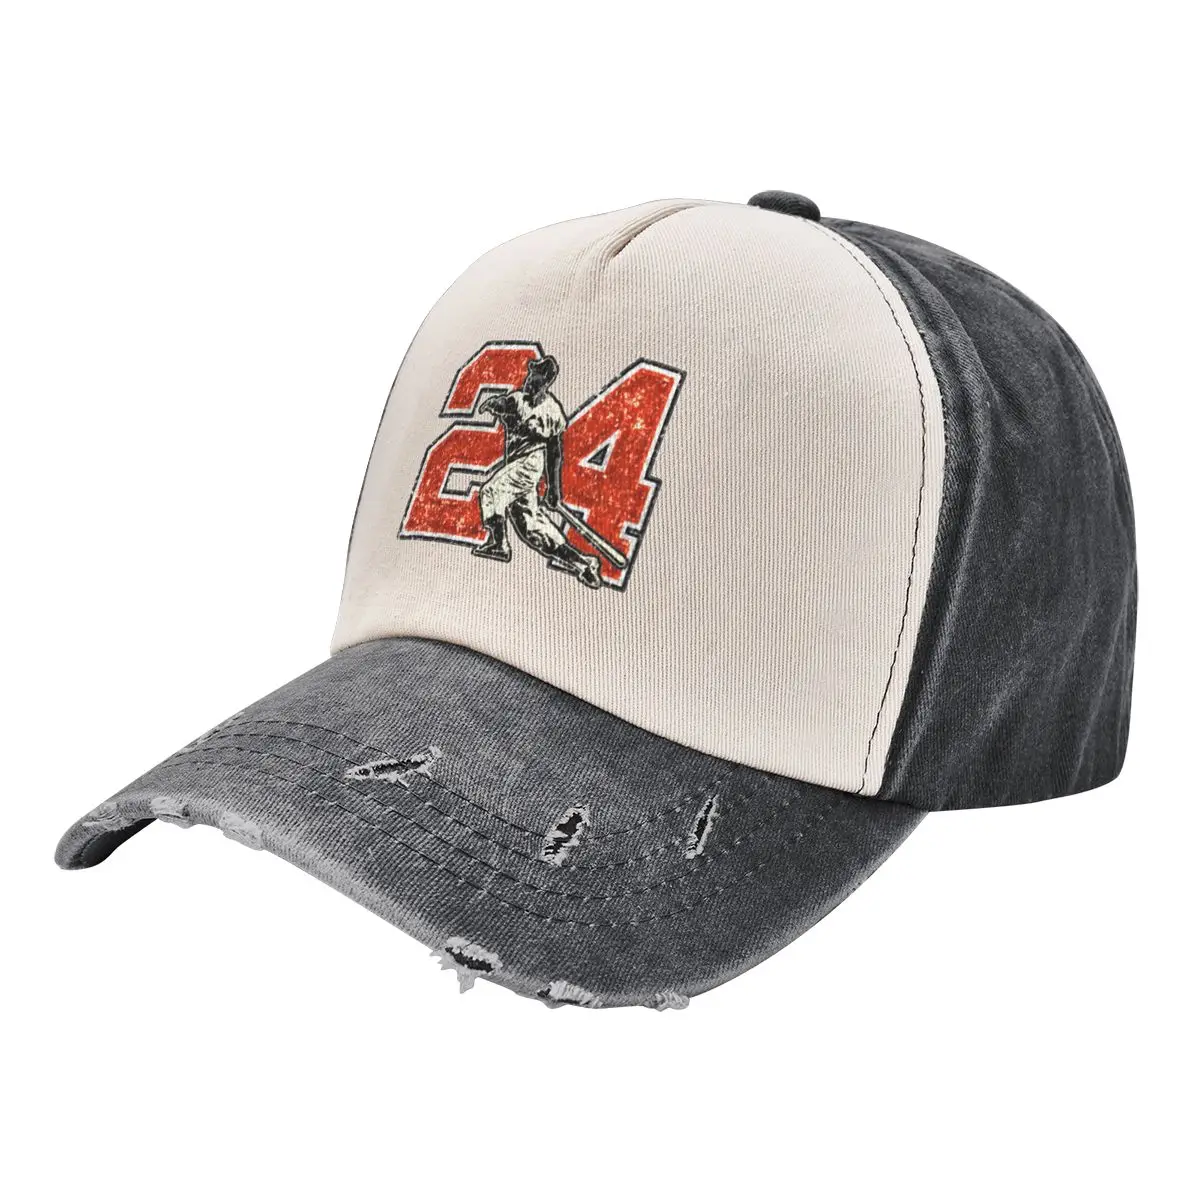 

24 - Say Hey Kid (vintage) Baseball Cap Sunscreen Luxury Man Hat Snap Back Hat Golf Wear Men Women's